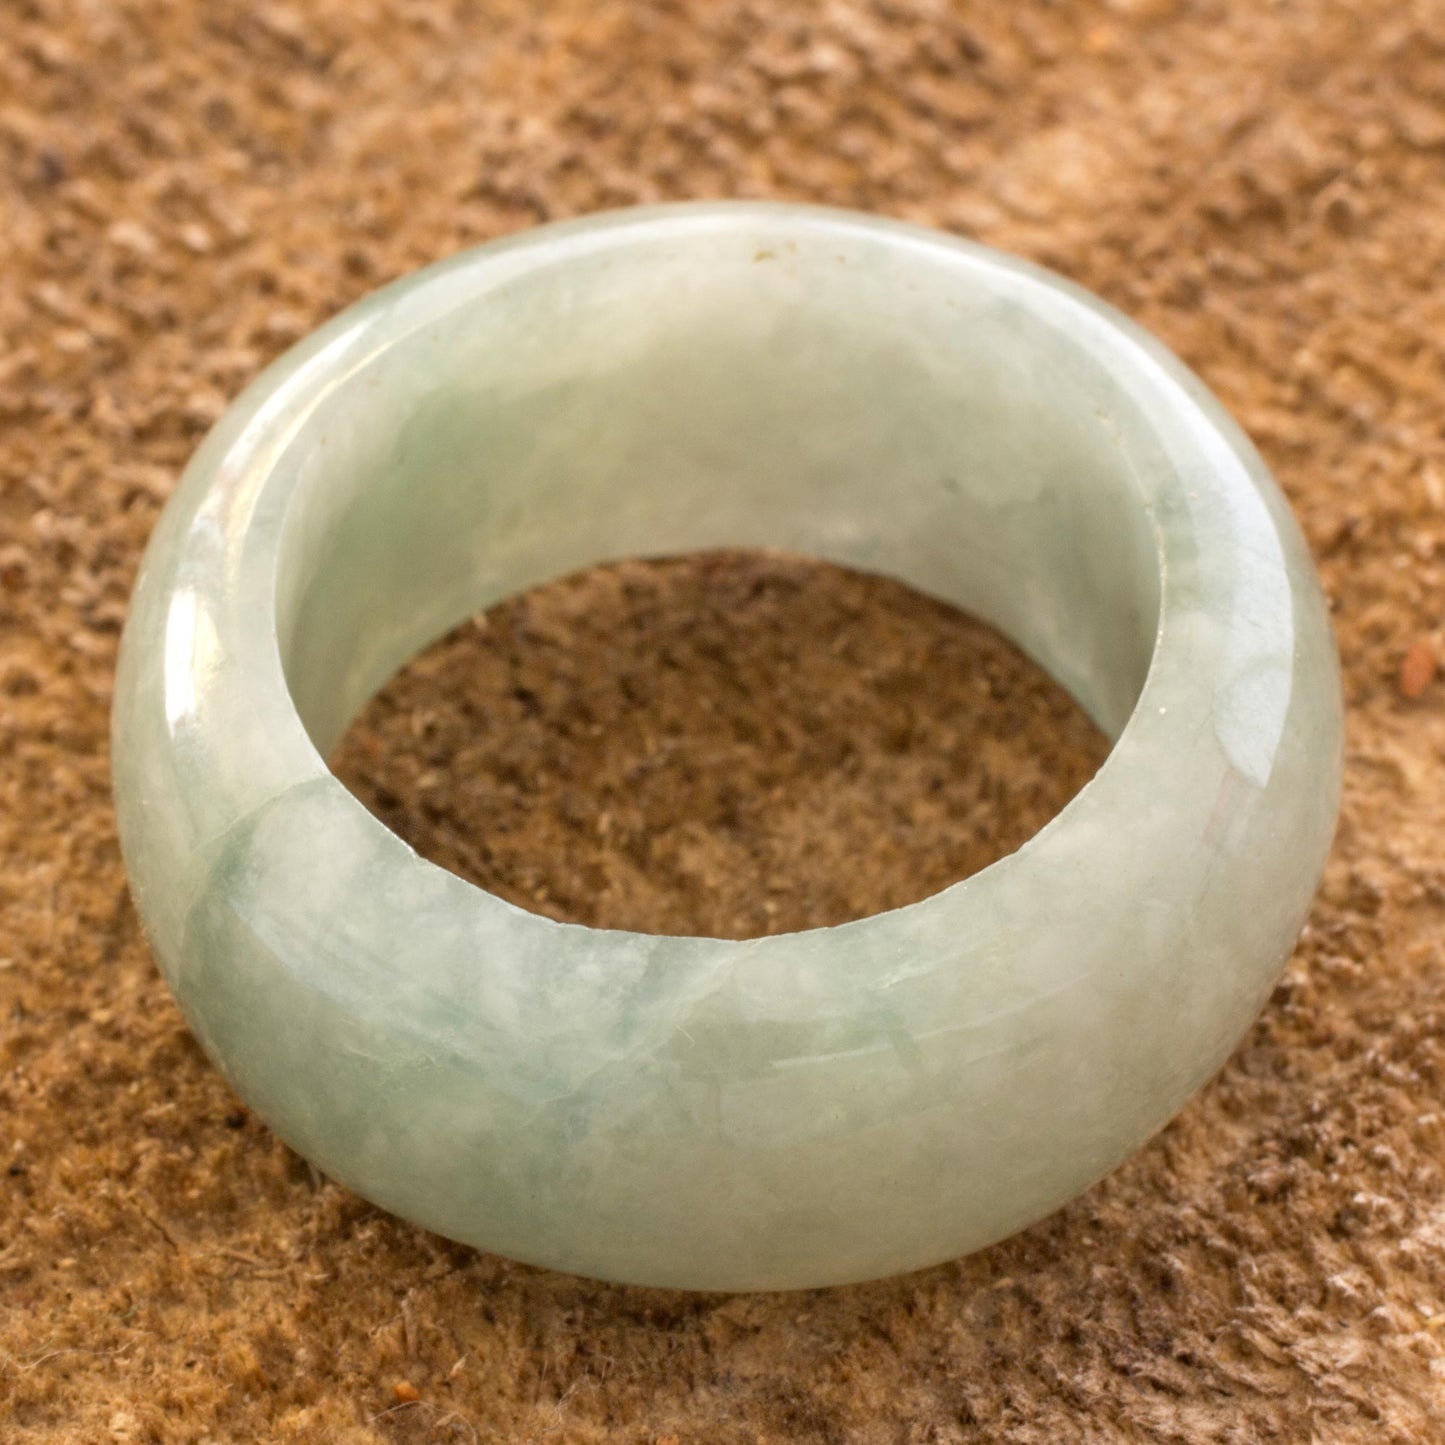 Pale Green Halo Jade Band Ring